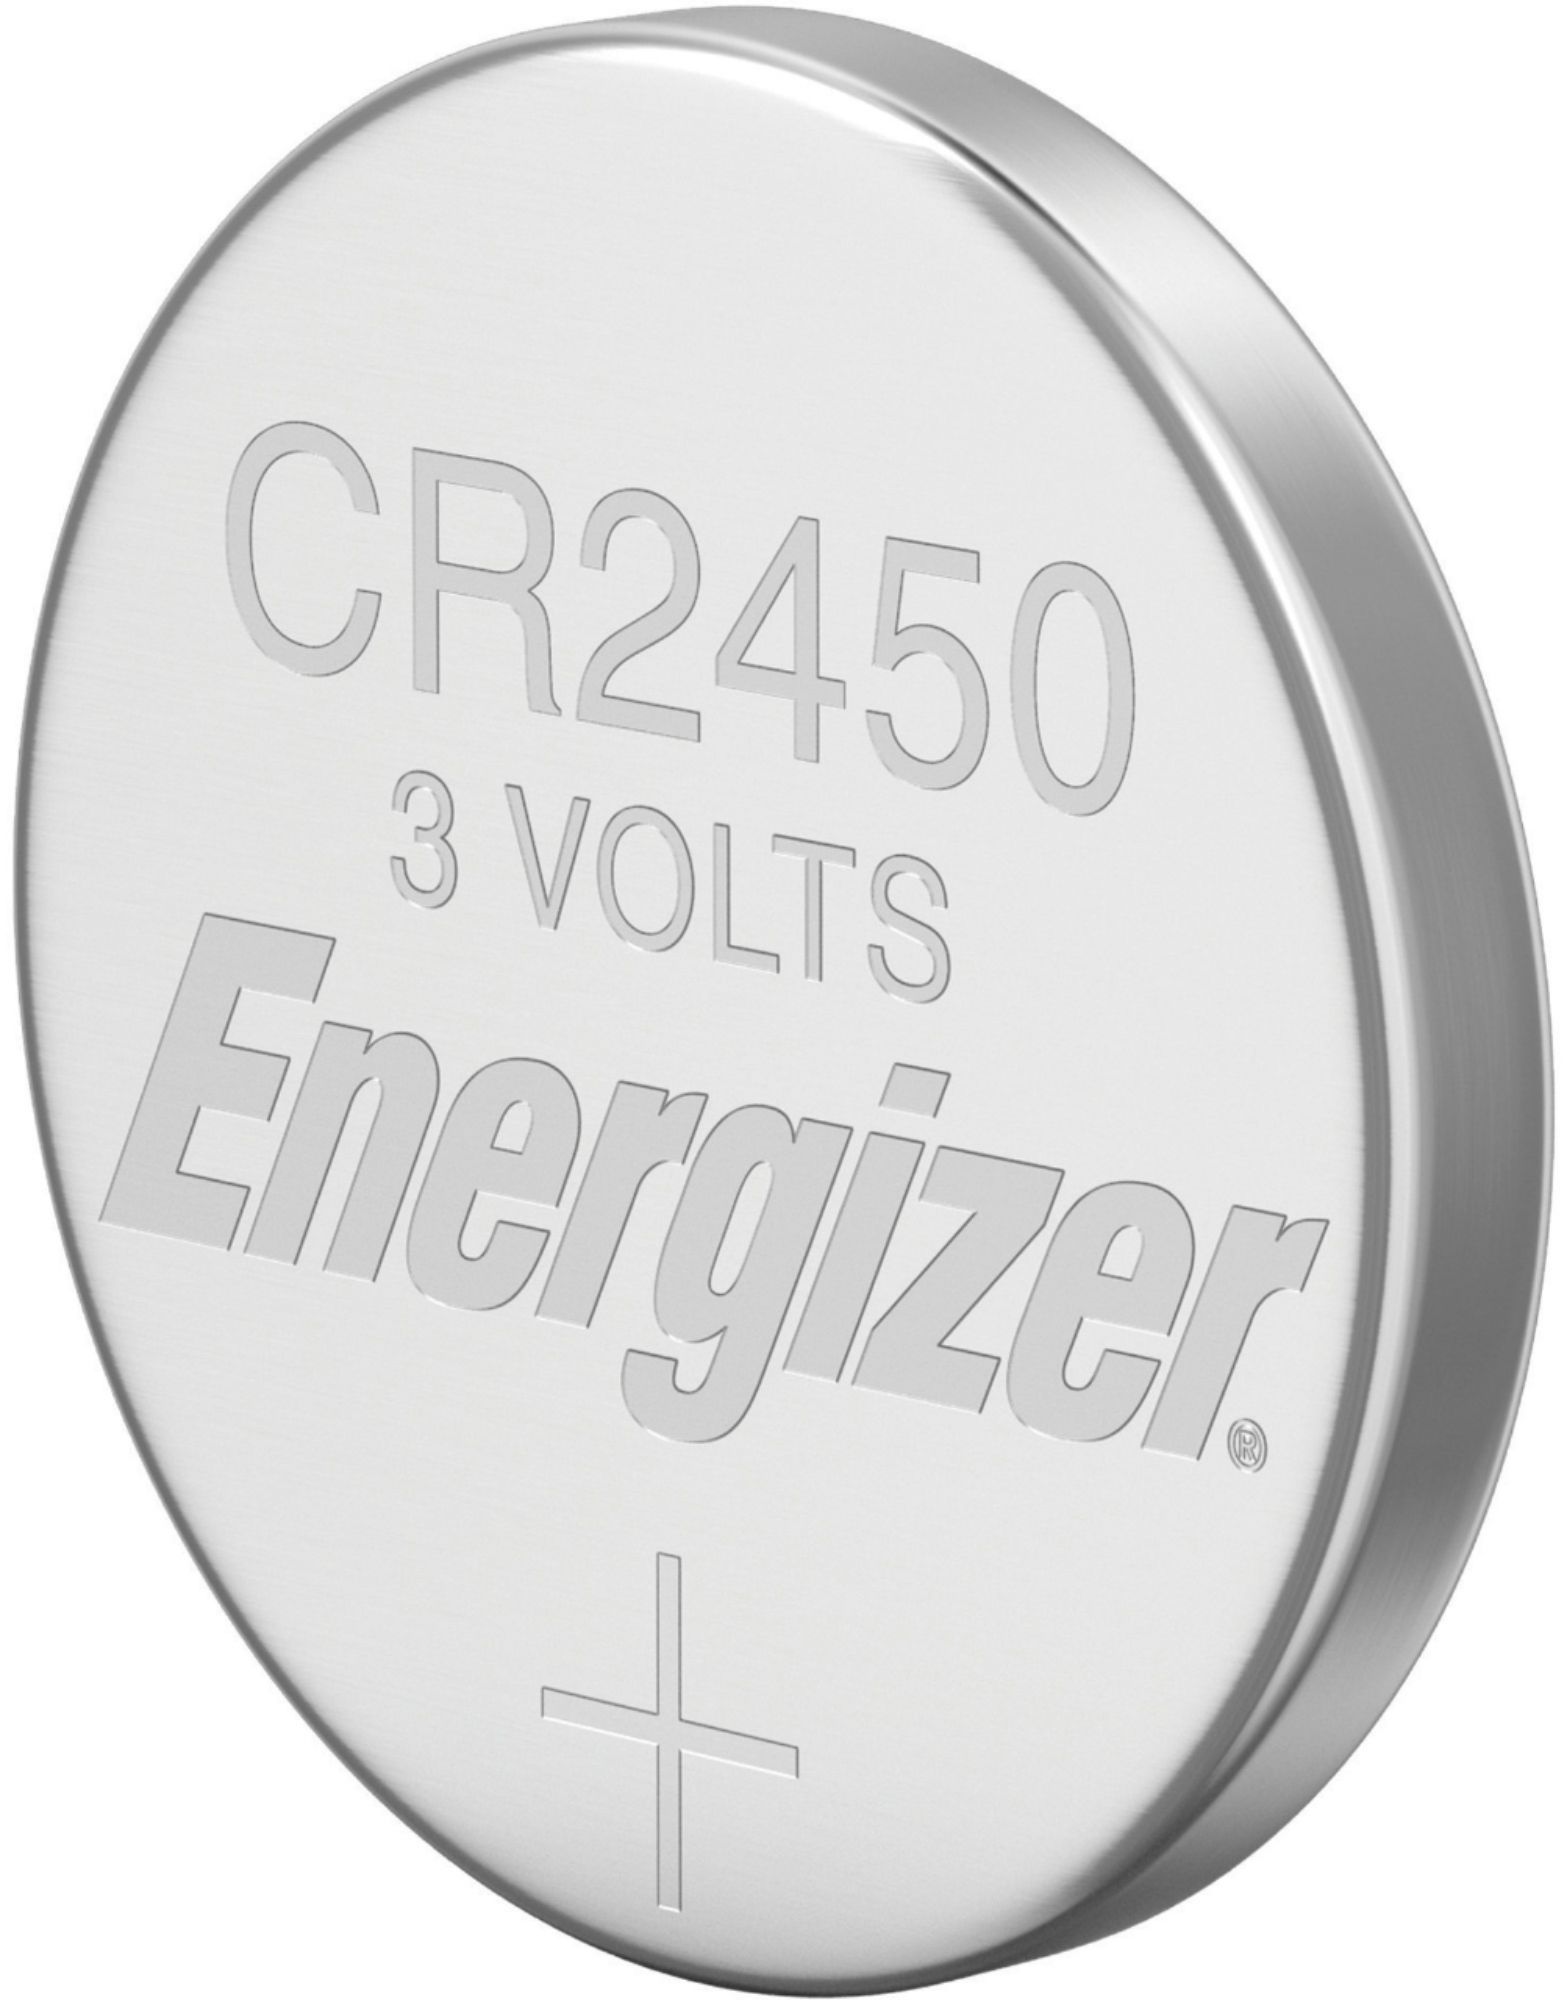 Energizer® CR2450 - Energizer